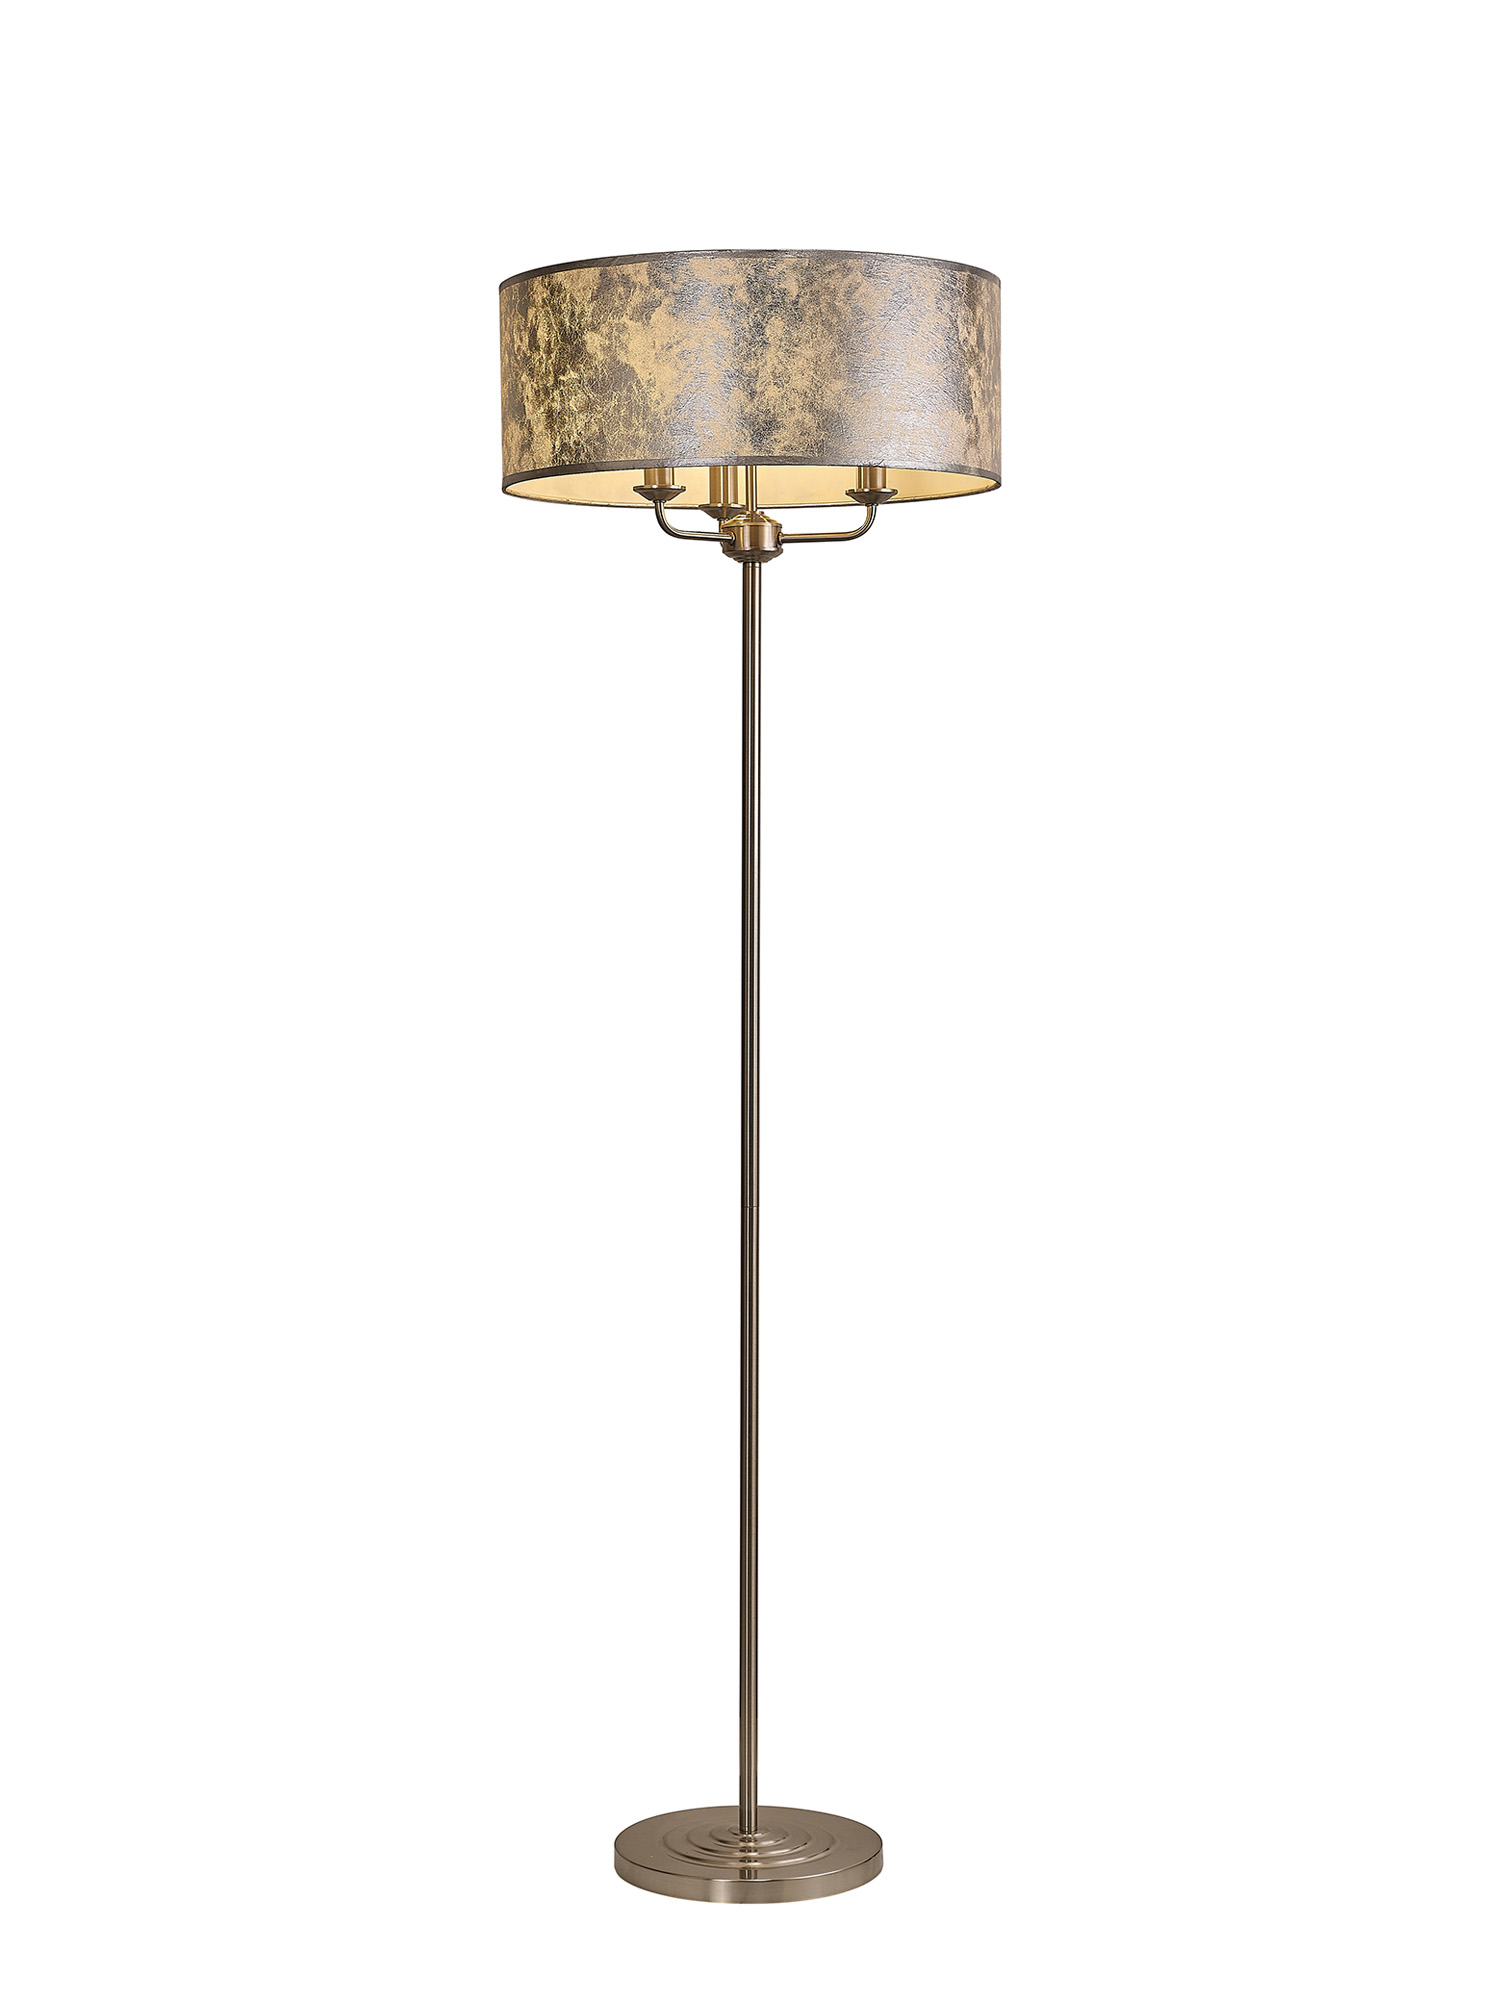 DK0940  Banyan 45cm 3 Light Floor Lamp Satin Nickel, Silver Leaf